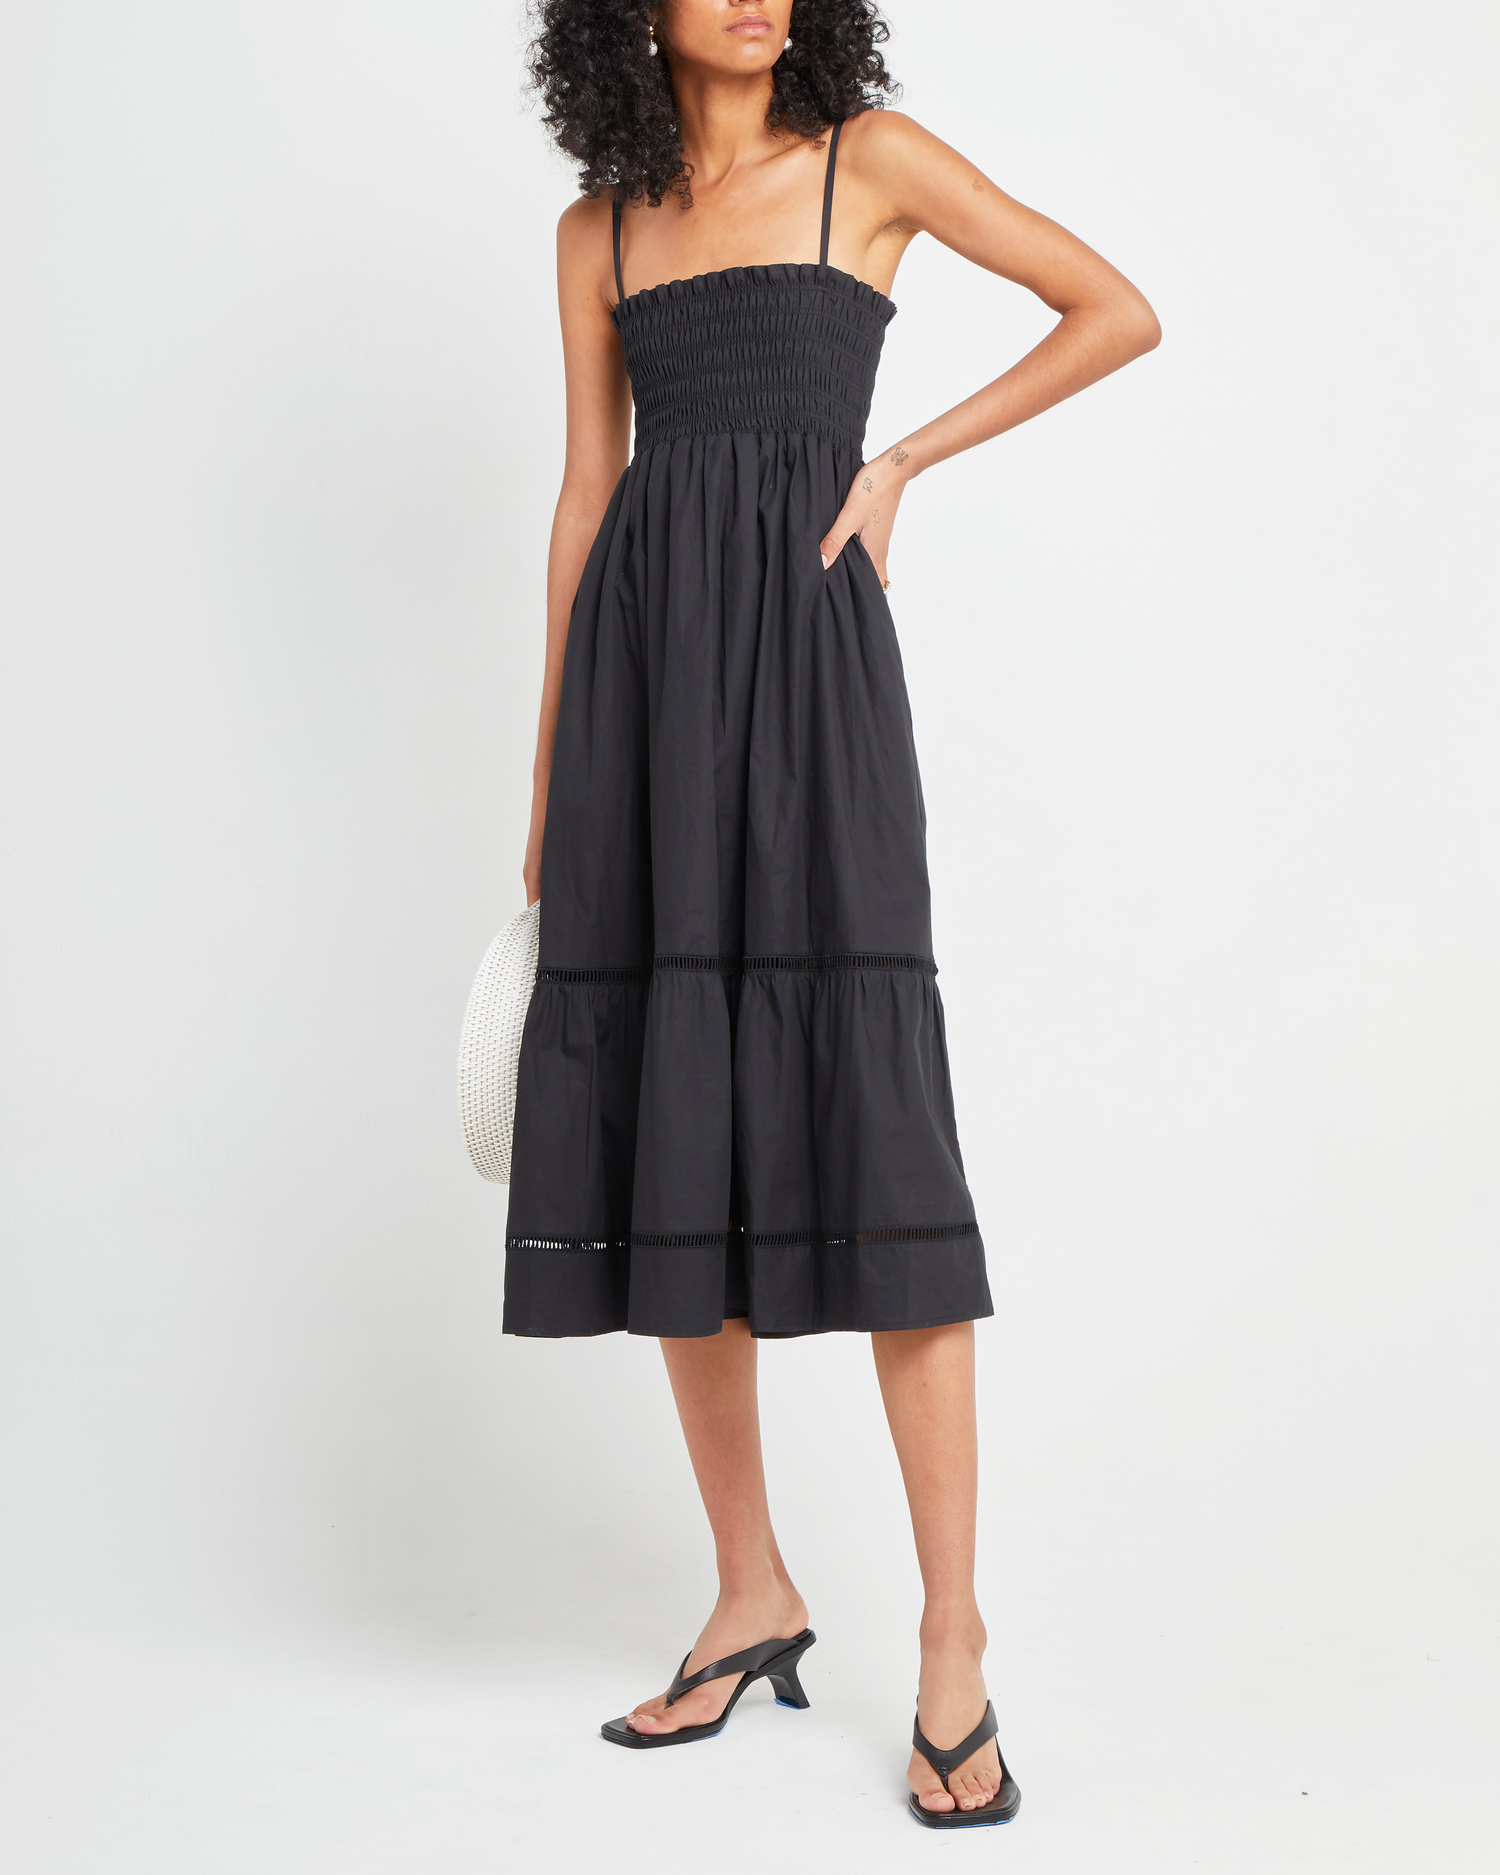 Fifth image of Cotton Leila Dress, a black midi dress, spaghetti strap, smocked bodice, tiered skirt